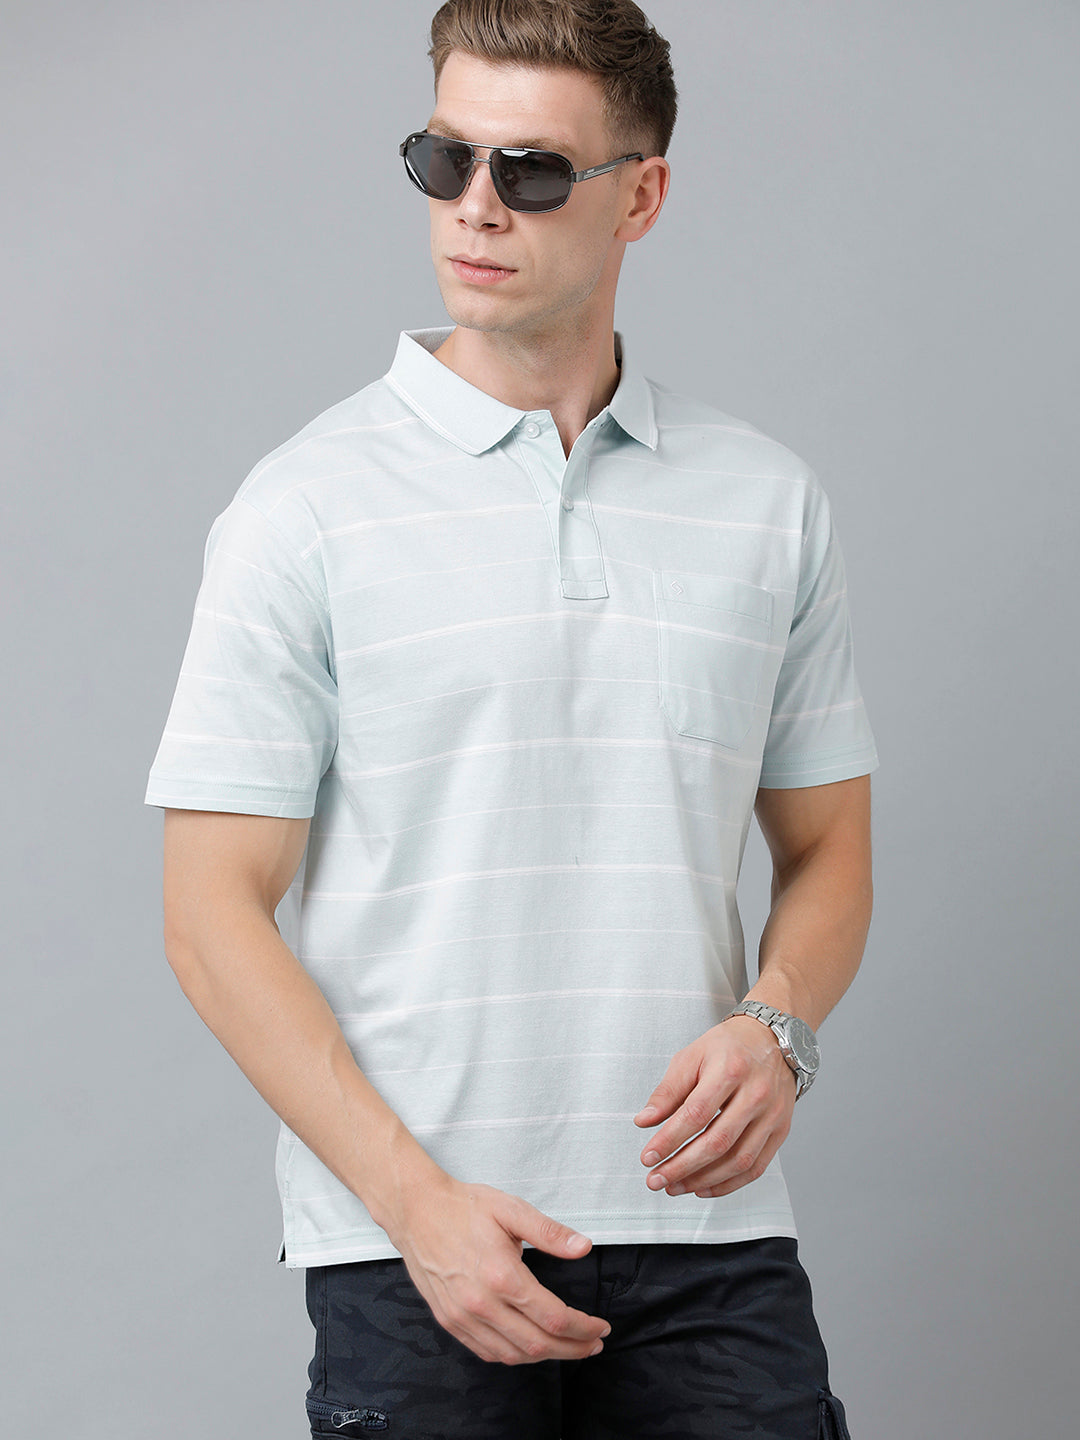 Classic Polo Men's Cotton Half Sleeve Striped Authentic Fit Polo Neck Sky Blue Color T-Shirt | Ap - 81 B